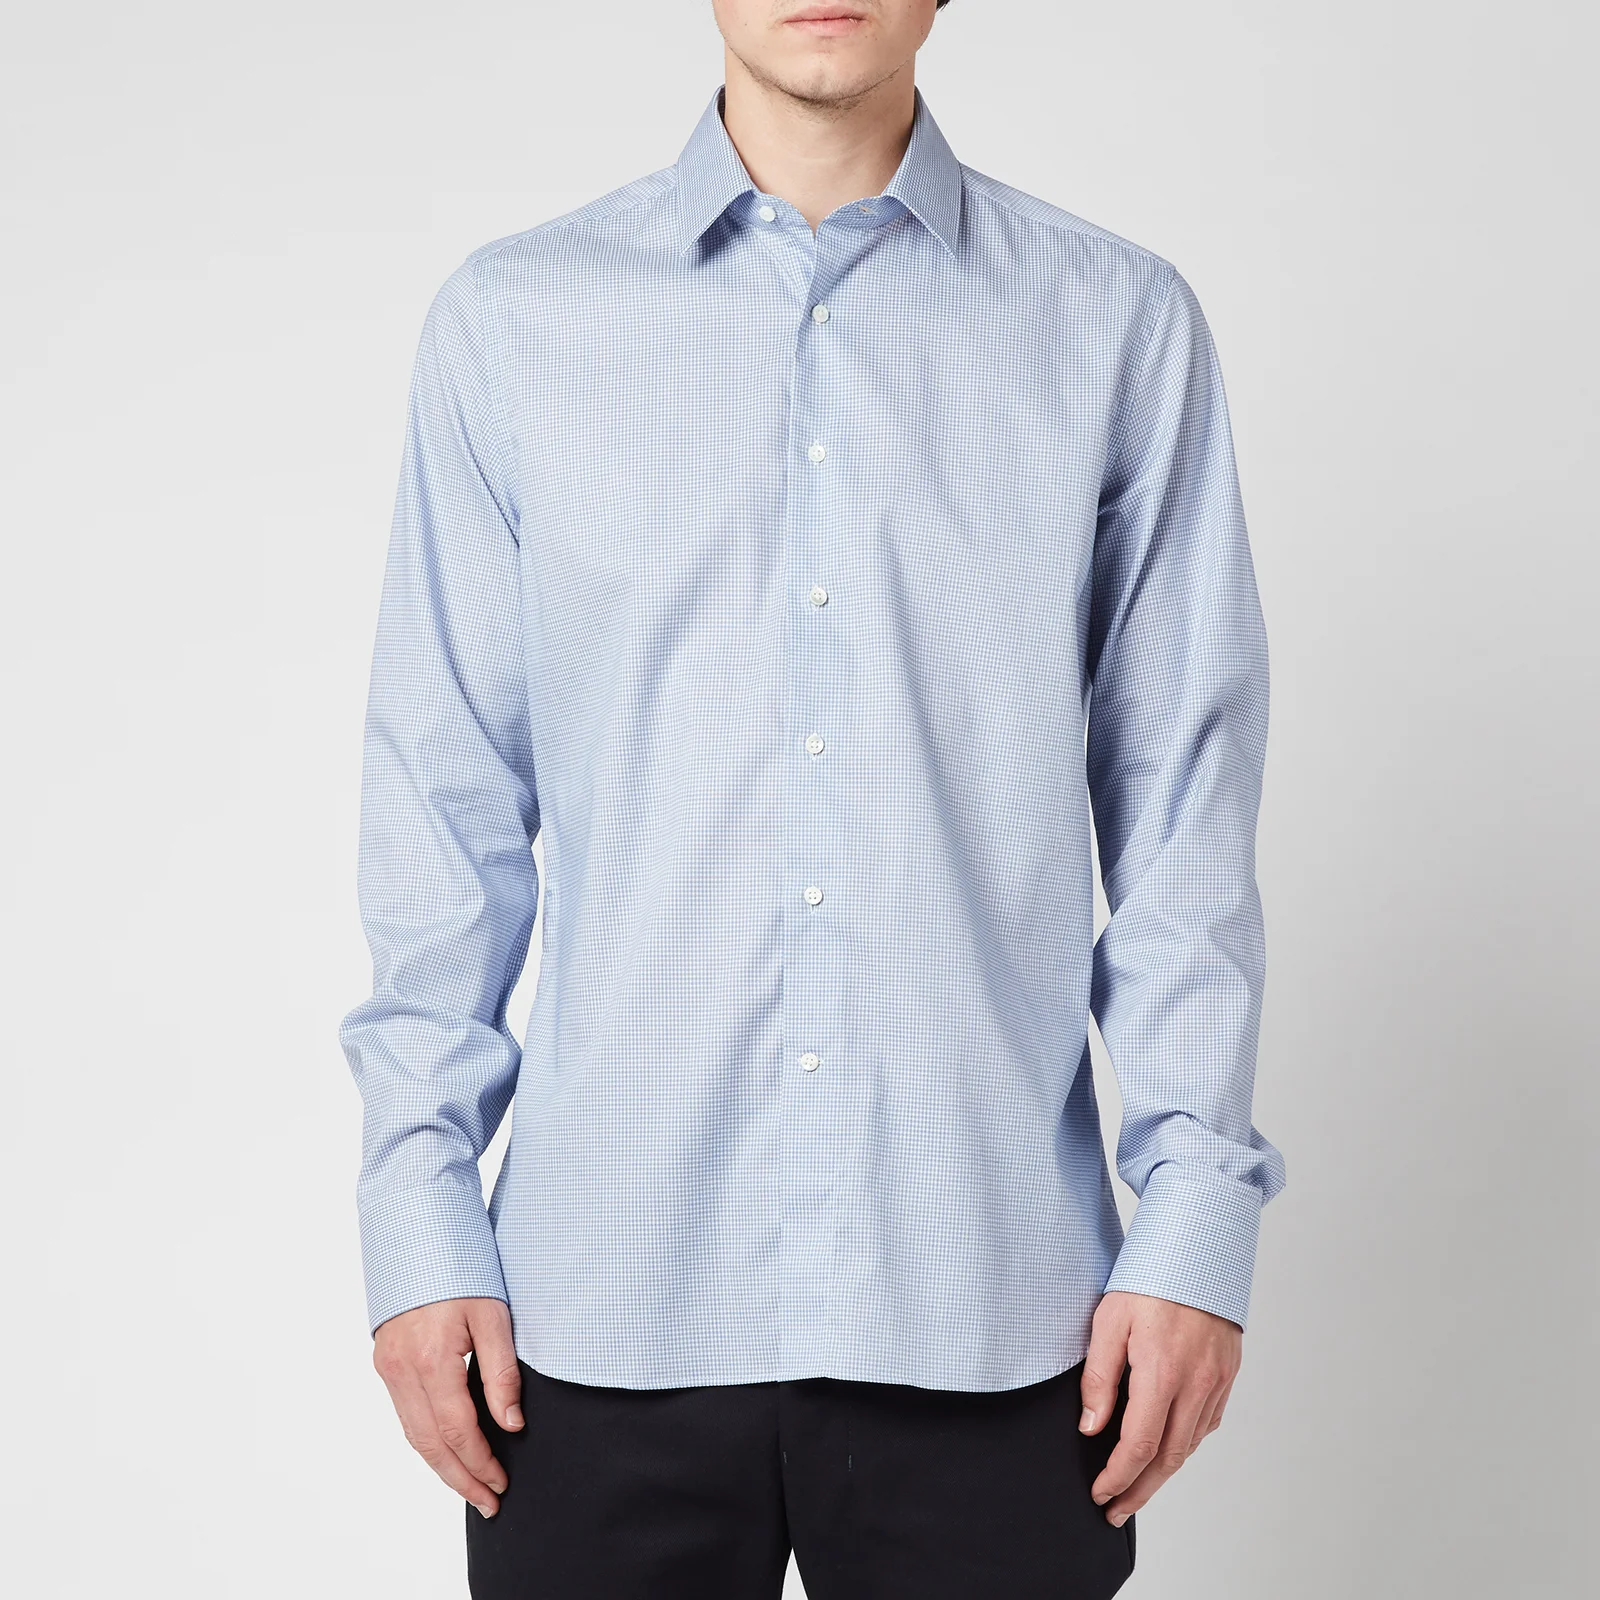 Canali Men's Micro Cotton Slim Fit Shirt - Mid Blue Image 1